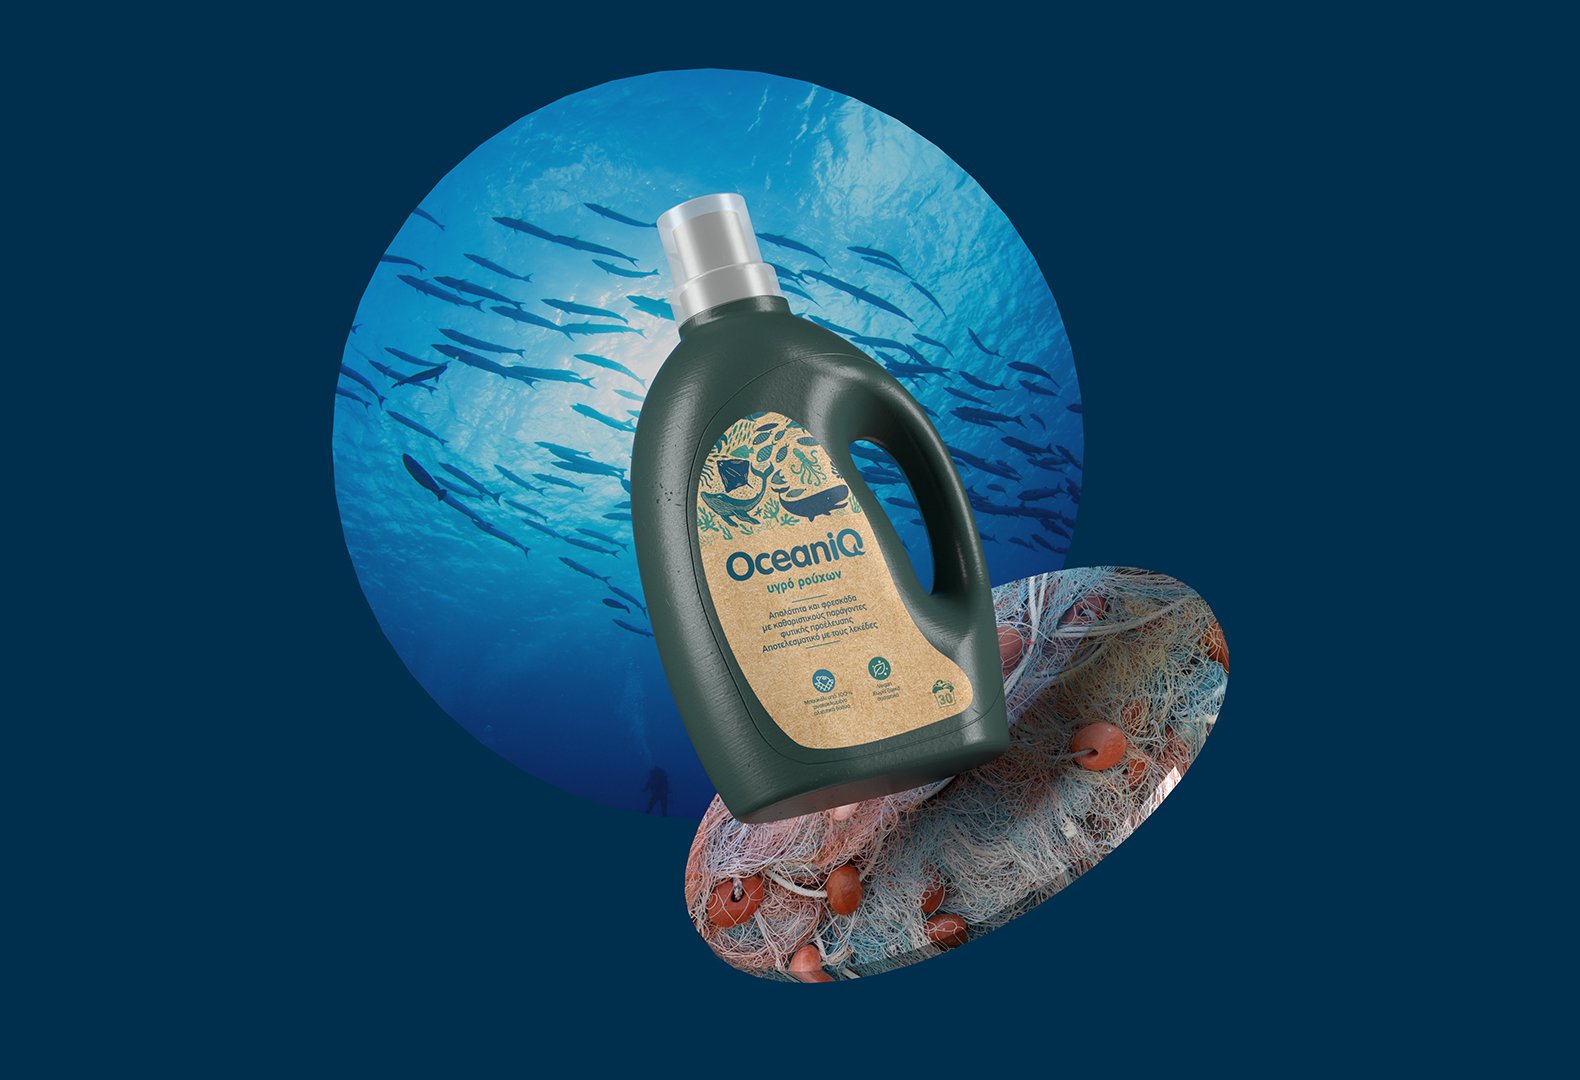 Oceaniq vegan laundry detergent packaging in sustainable packaging